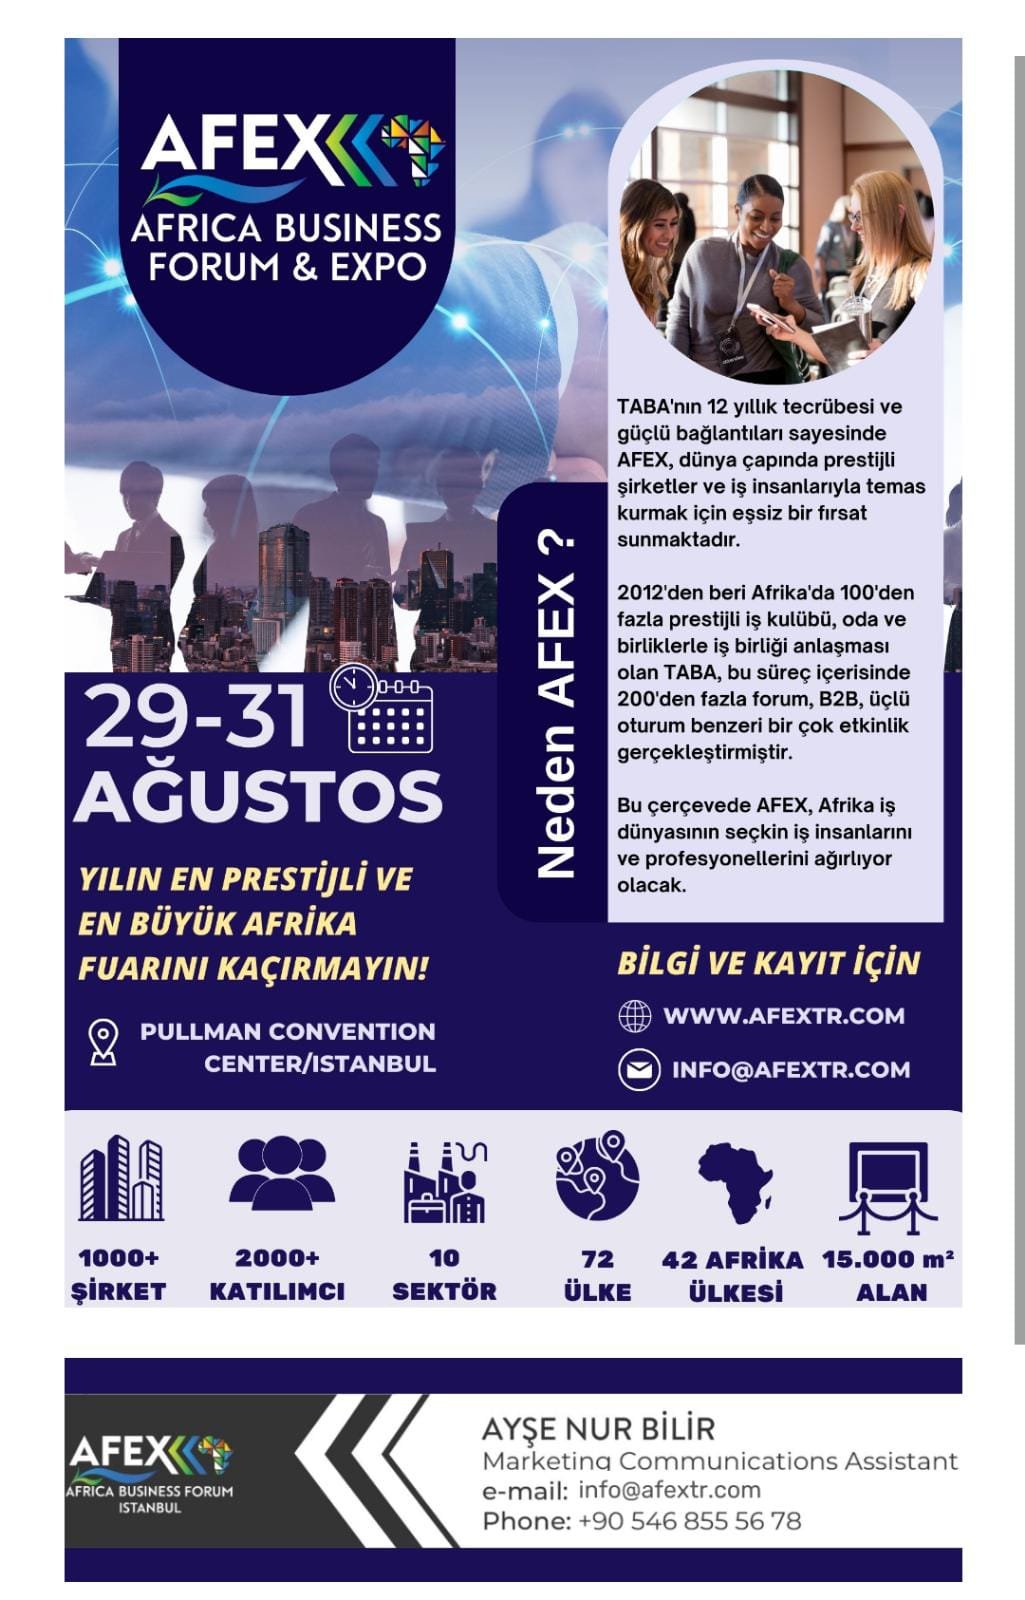 AFEX-AFRİKA İŞ FORUMU & EXPO İSTANBUL 29-31 AĞUSTOS İSTANBUL